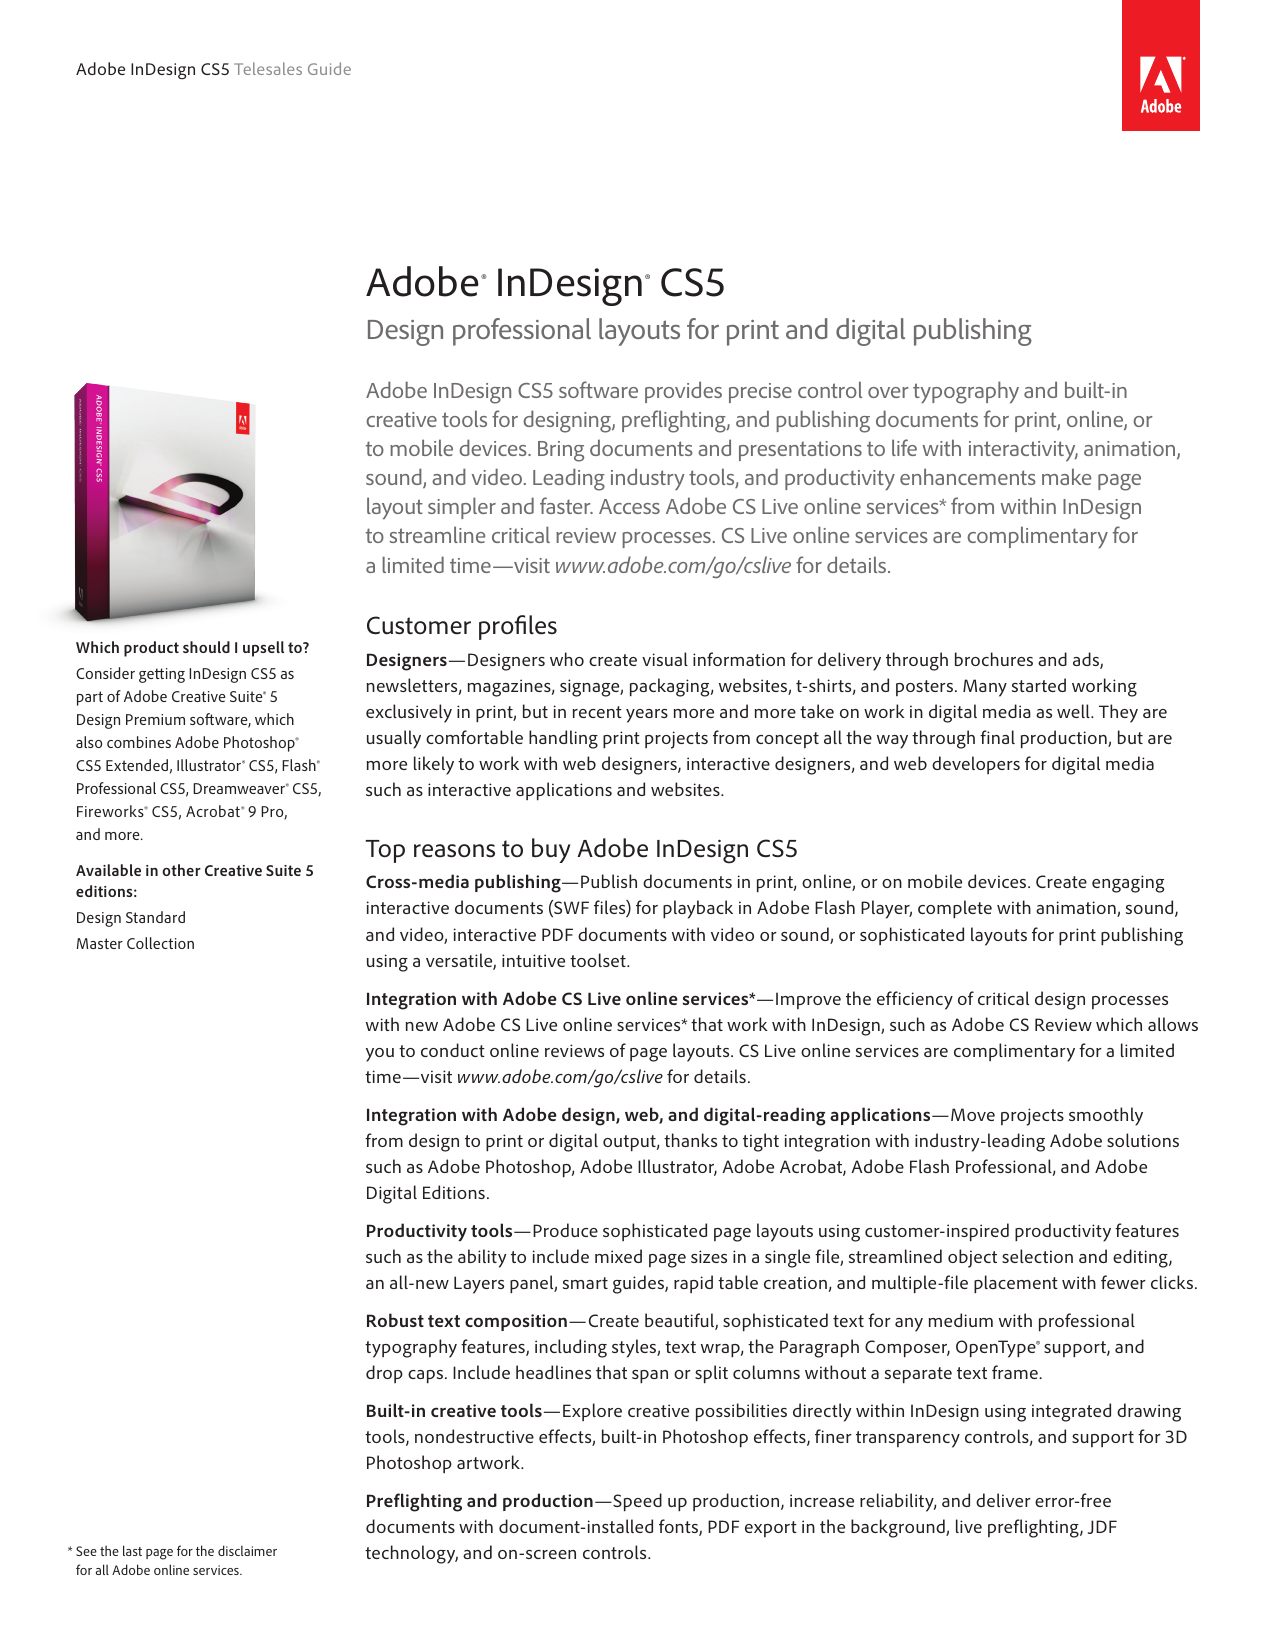 adobe indesign cs5 free download full version for windows 7